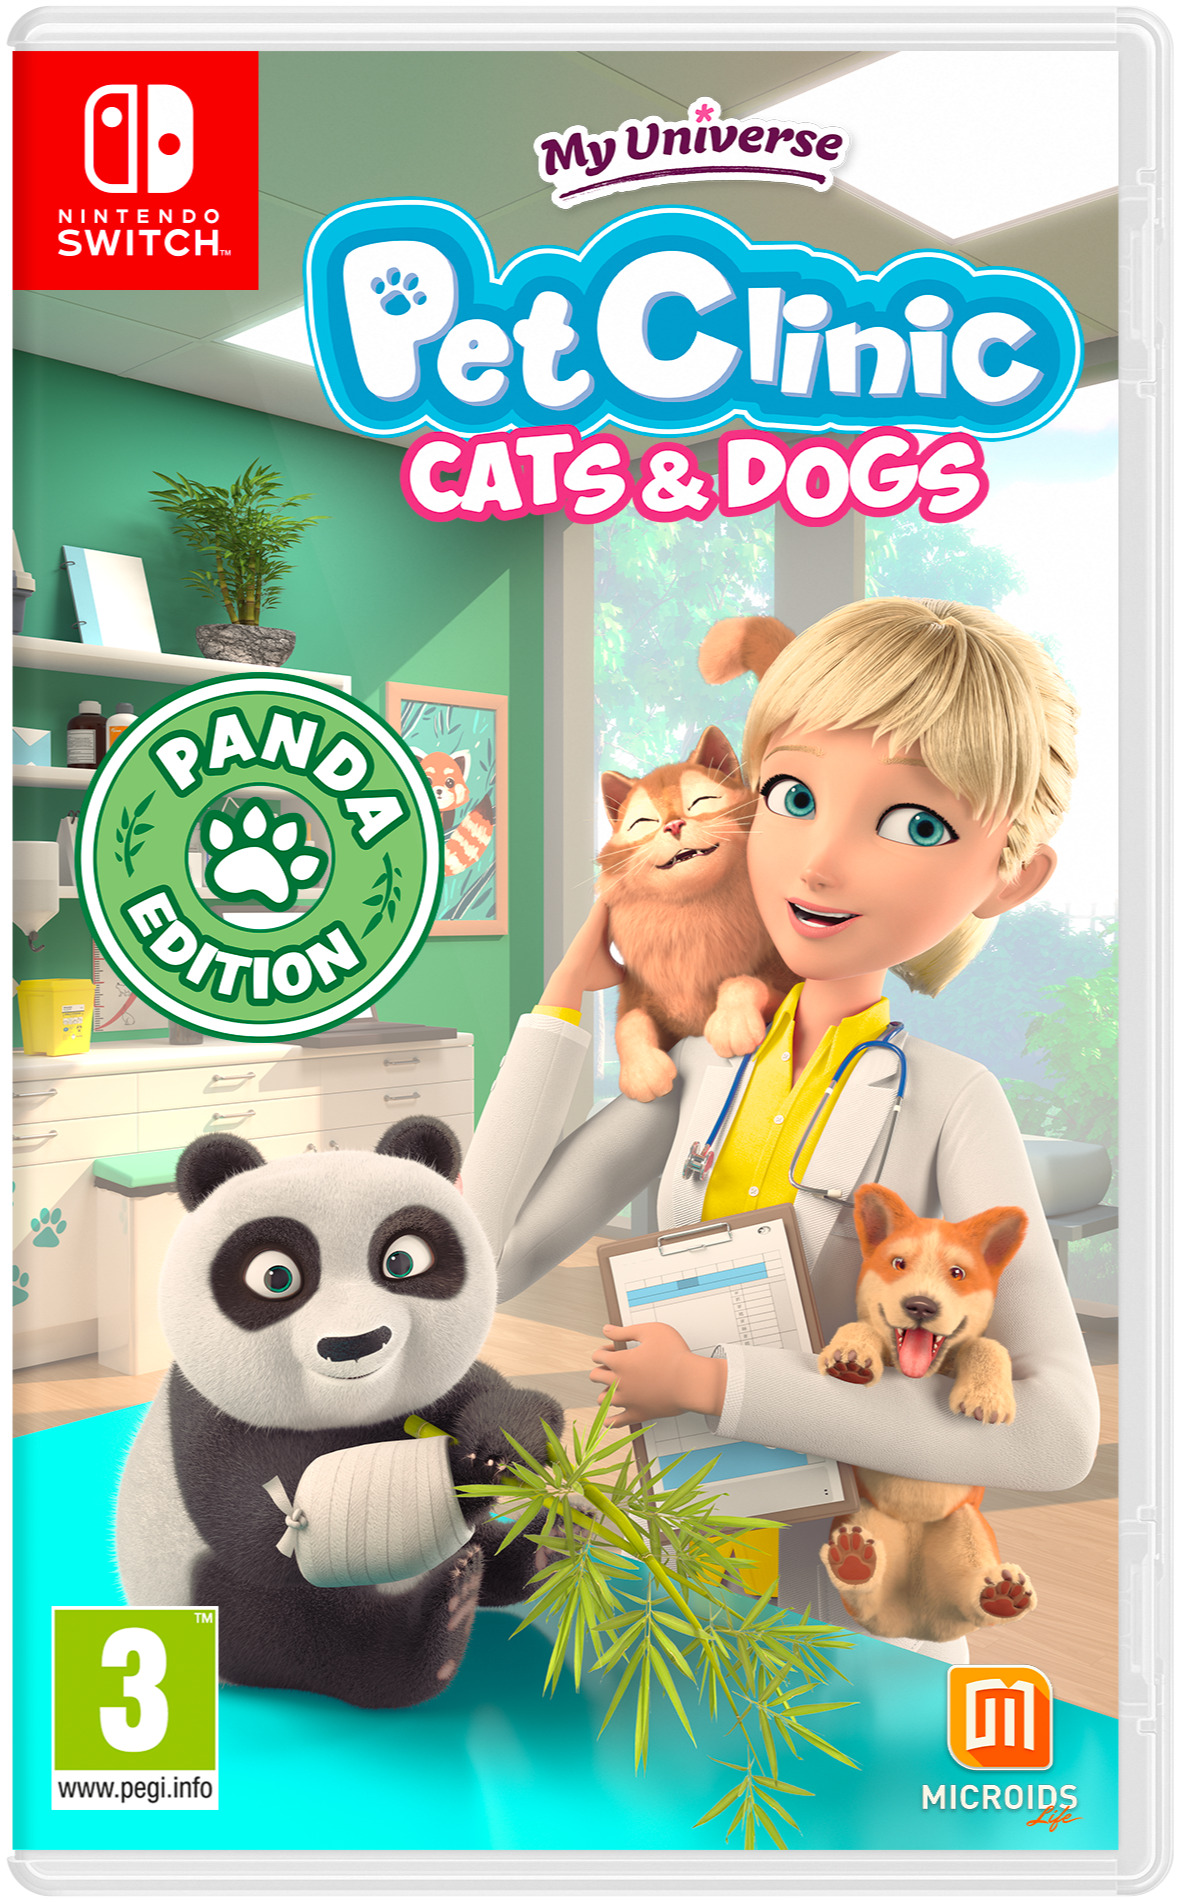 My Universe Pet Clinic: Cats & Dogs - Panda Edition (SWITCH)